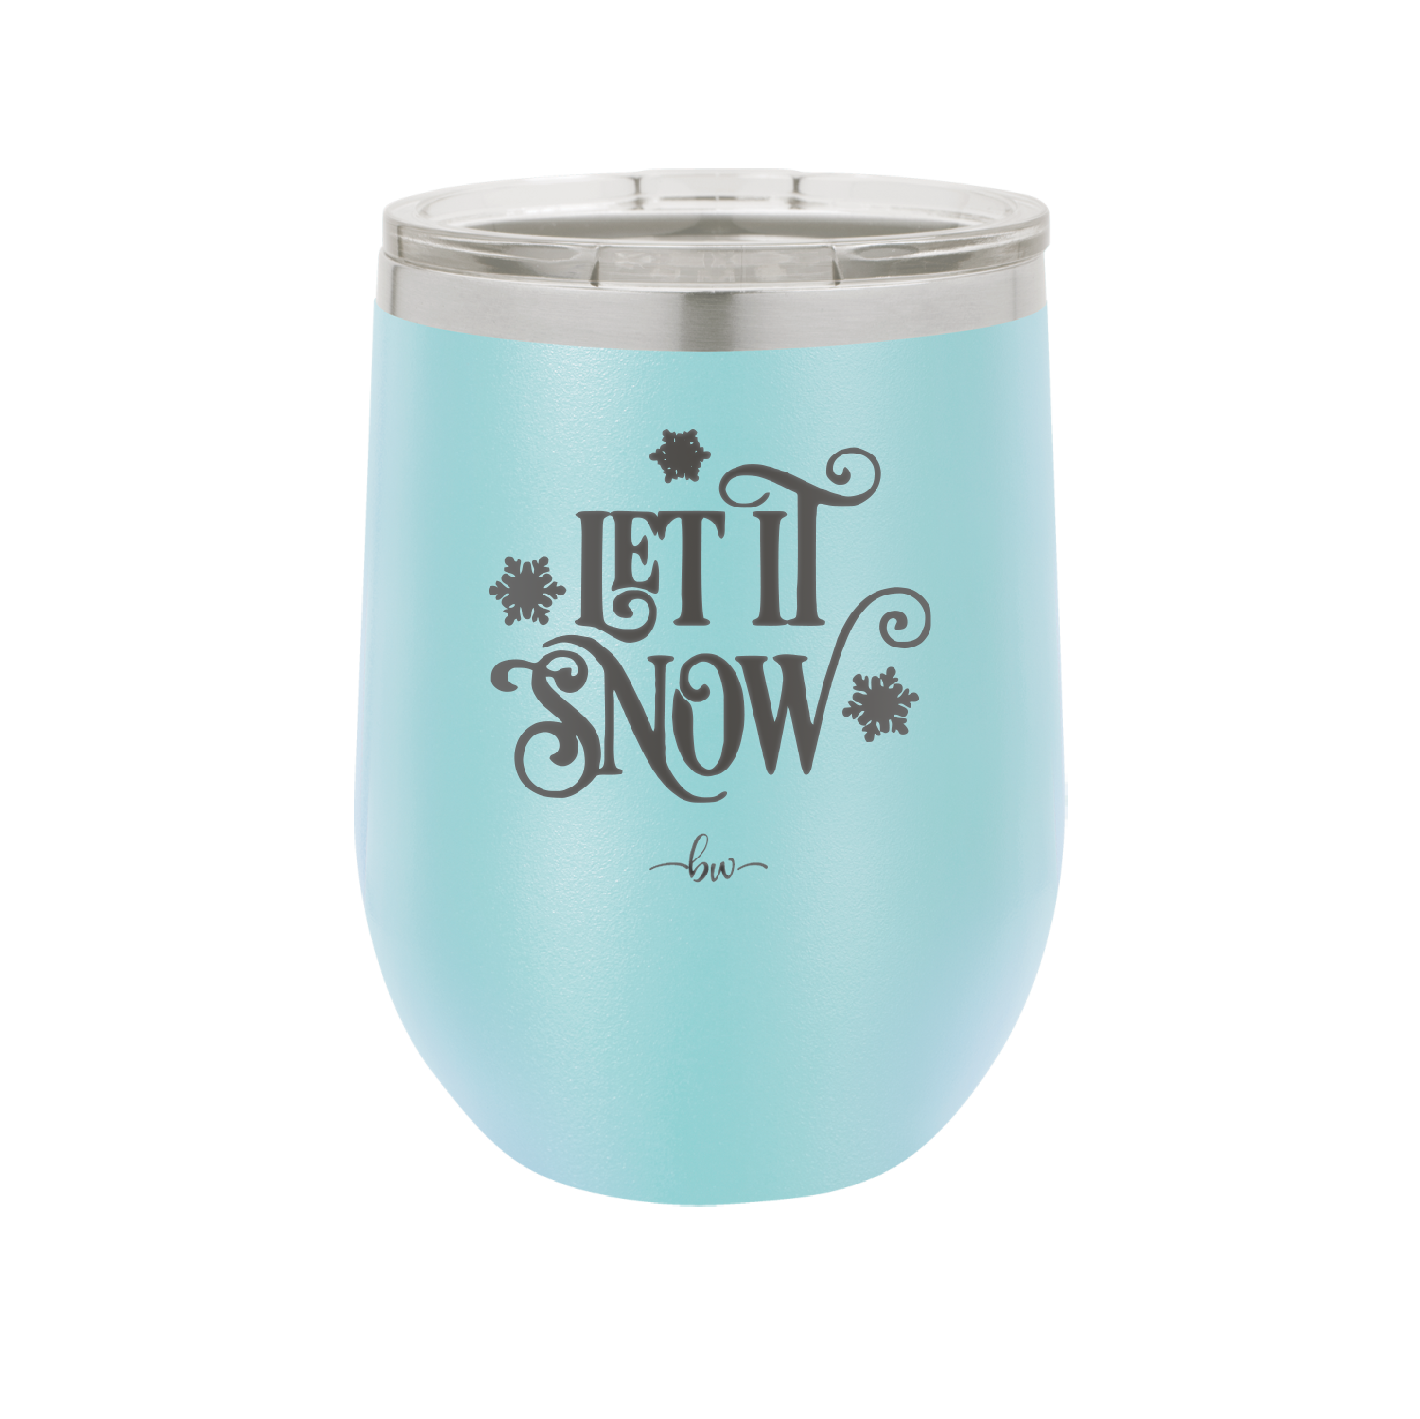 Let it Snow - Laser Engraved Stainless Steel Drinkware - 1218 -